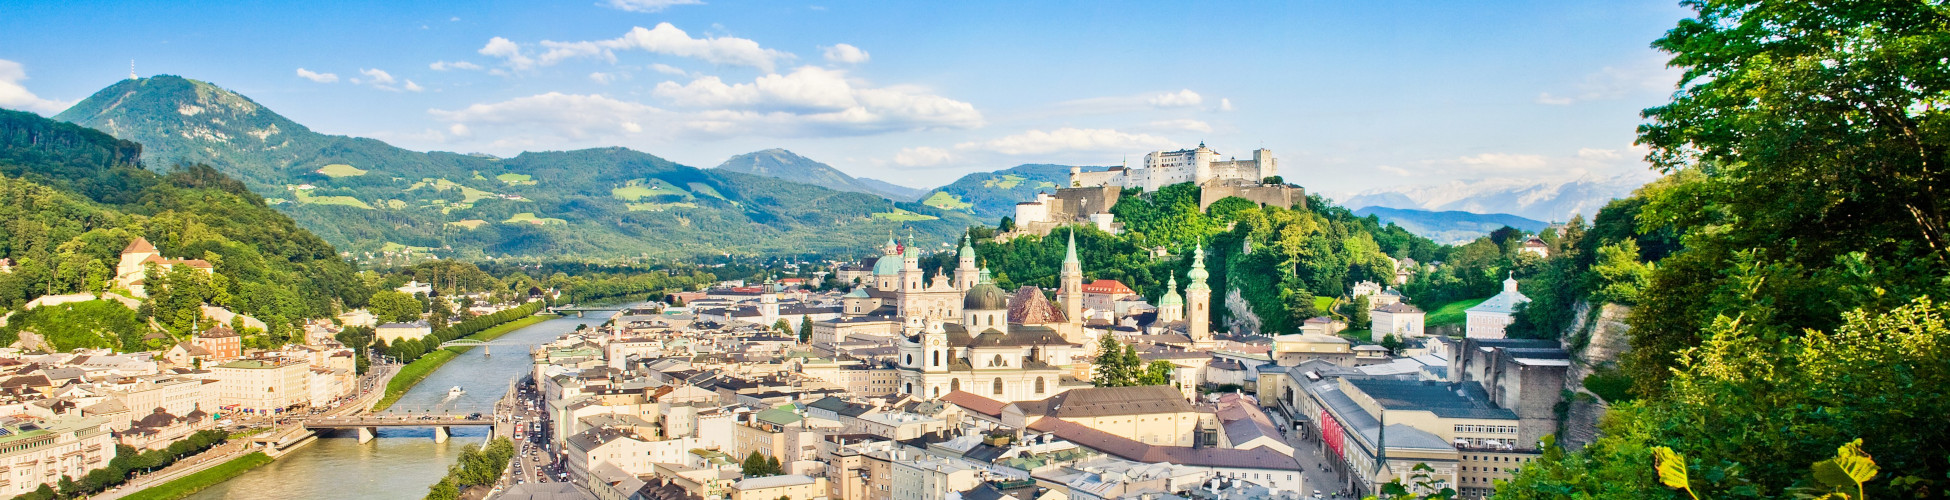 Panorama Salzburg_Alumni Erika Ramsauer